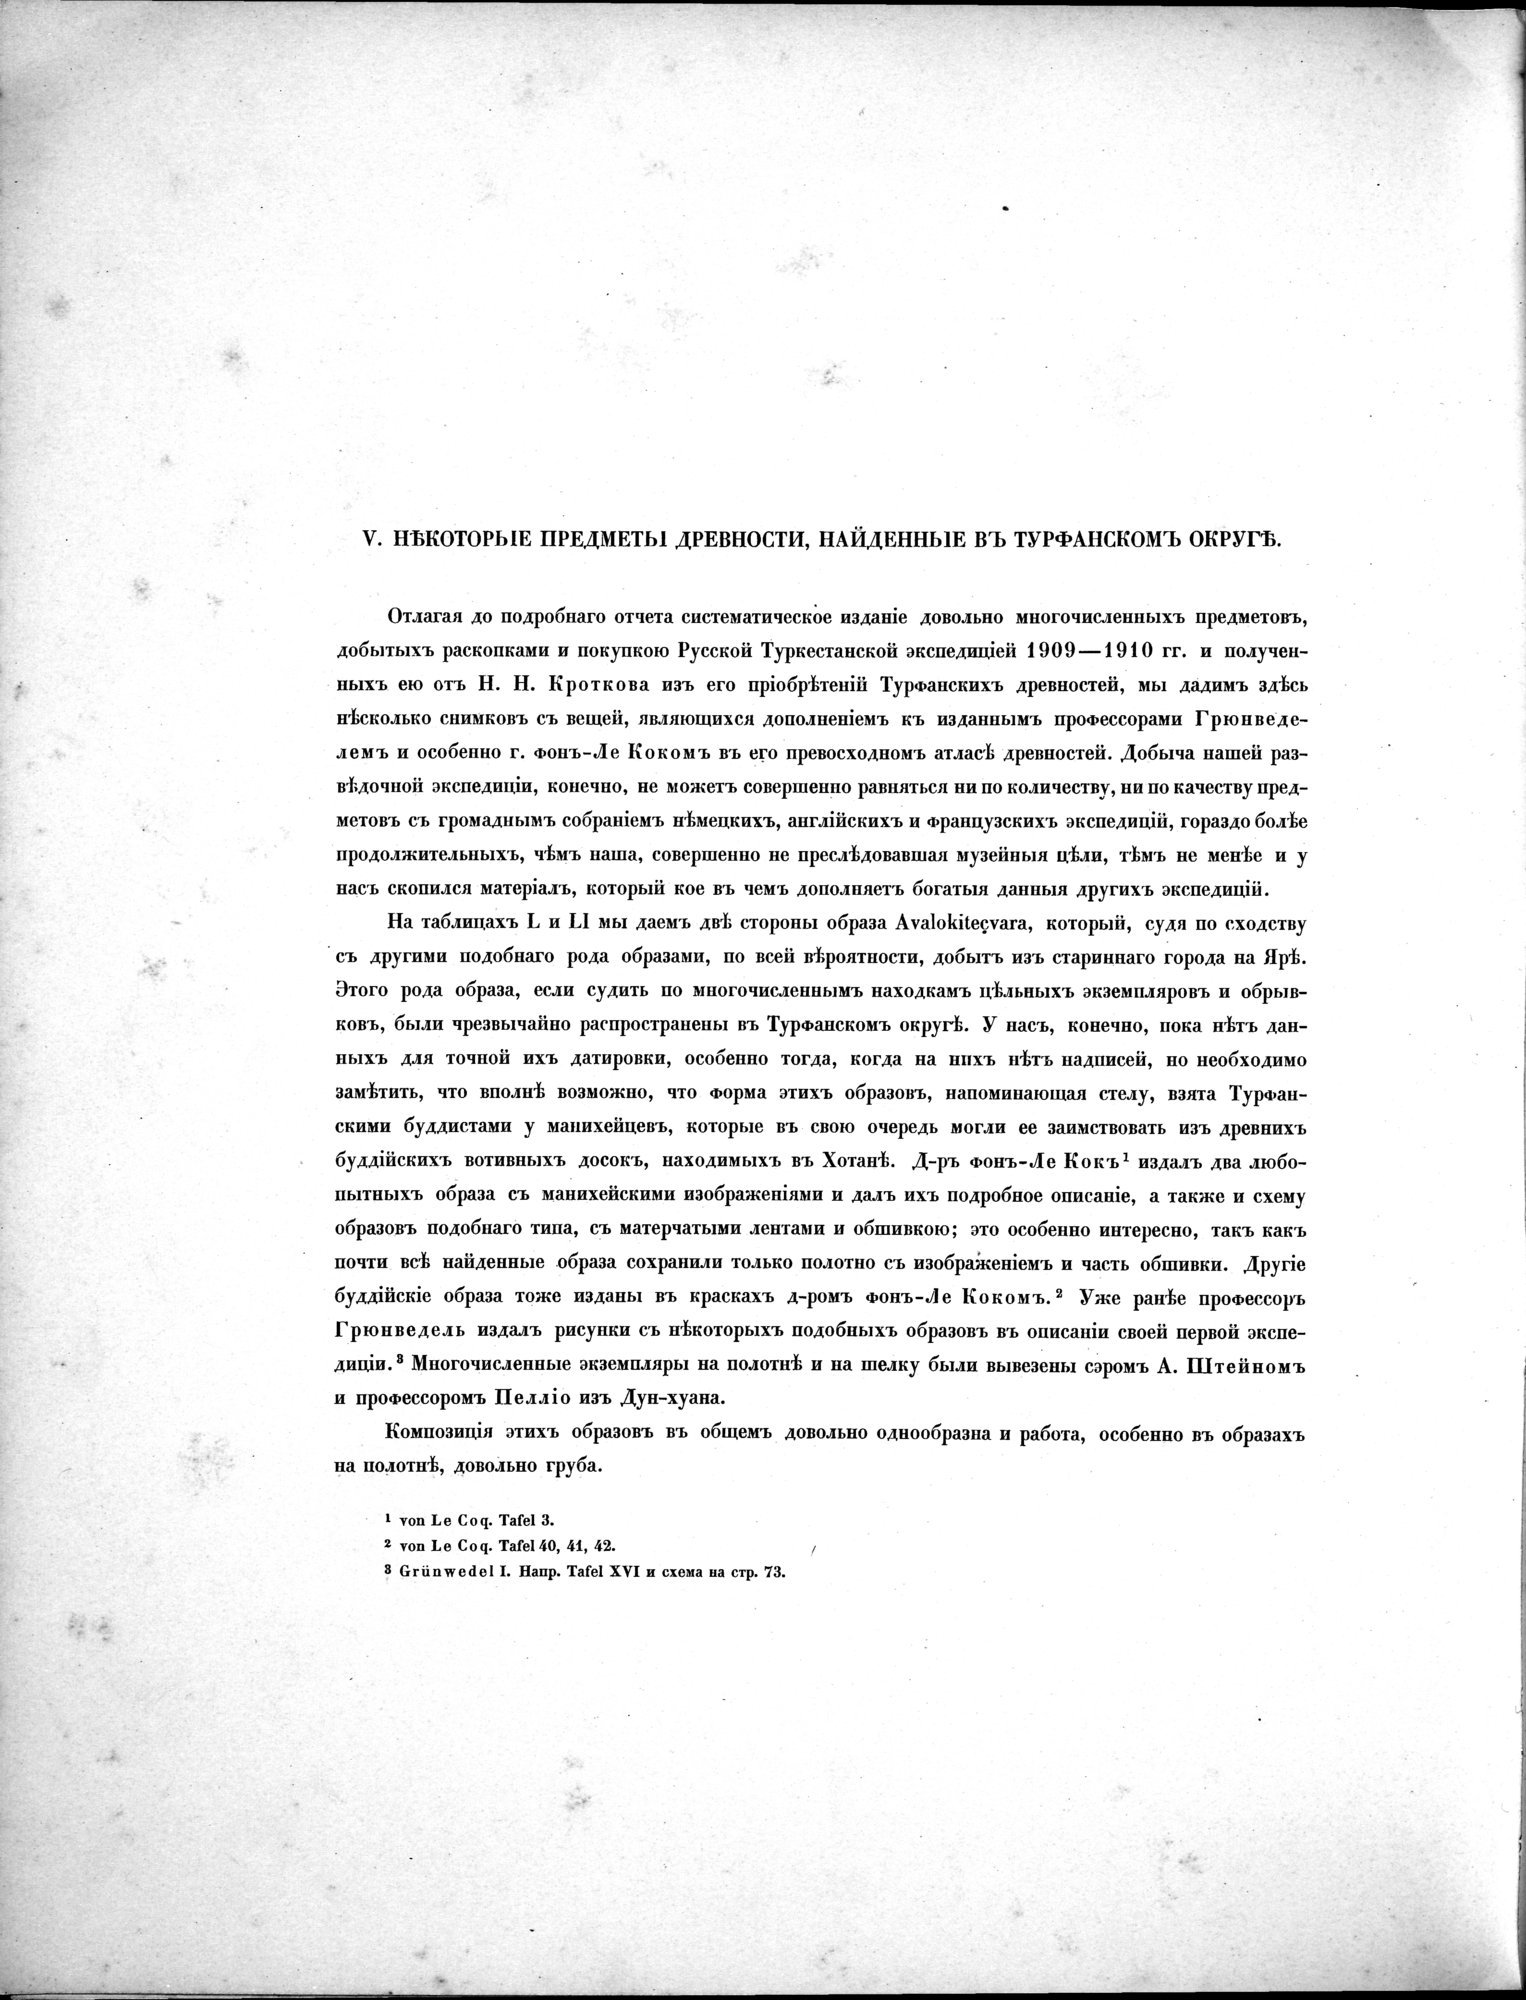 Russkaia Turkestanskaia Ekspeditsiia, 1909-1910 goda : vol.1 / Page 88 (Grayscale High Resolution Image)